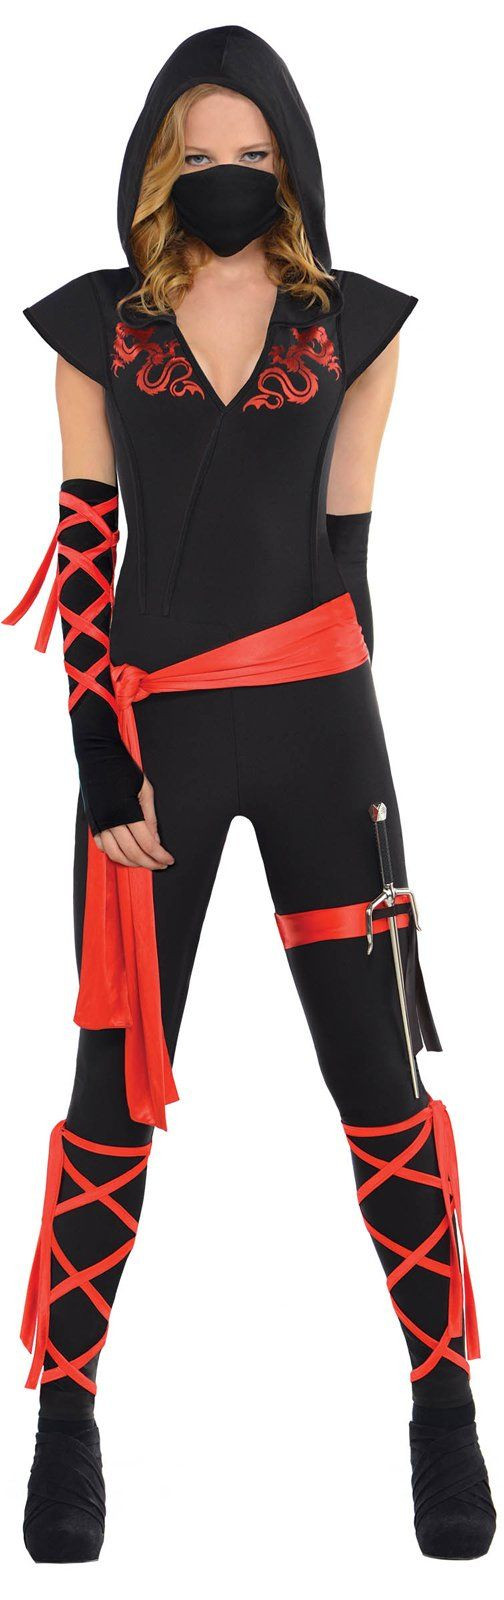 Best ideas about DIY Woman Ninja Costume
. Save or Pin Best 25 Female ninja costume ideas on Pinterest Now.